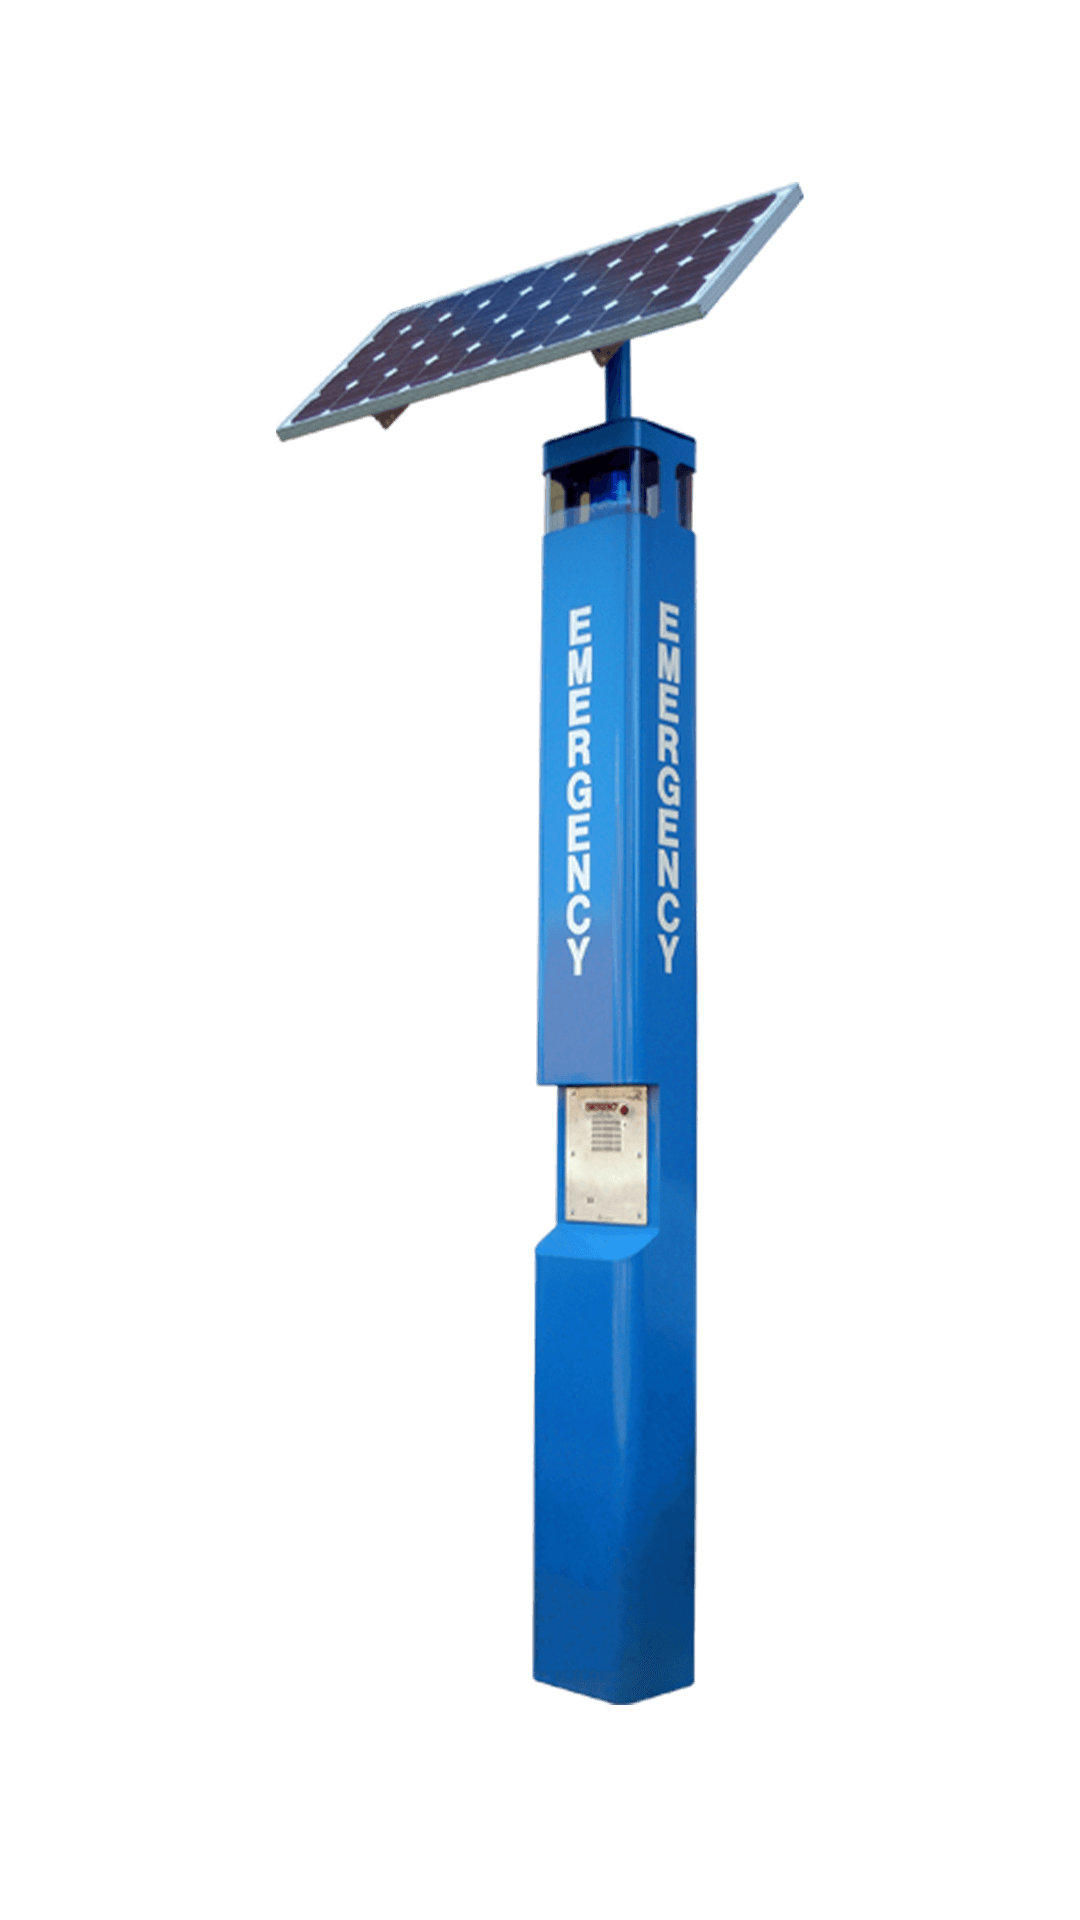 Wireless/Solar Ready Radius Blue Light Tower